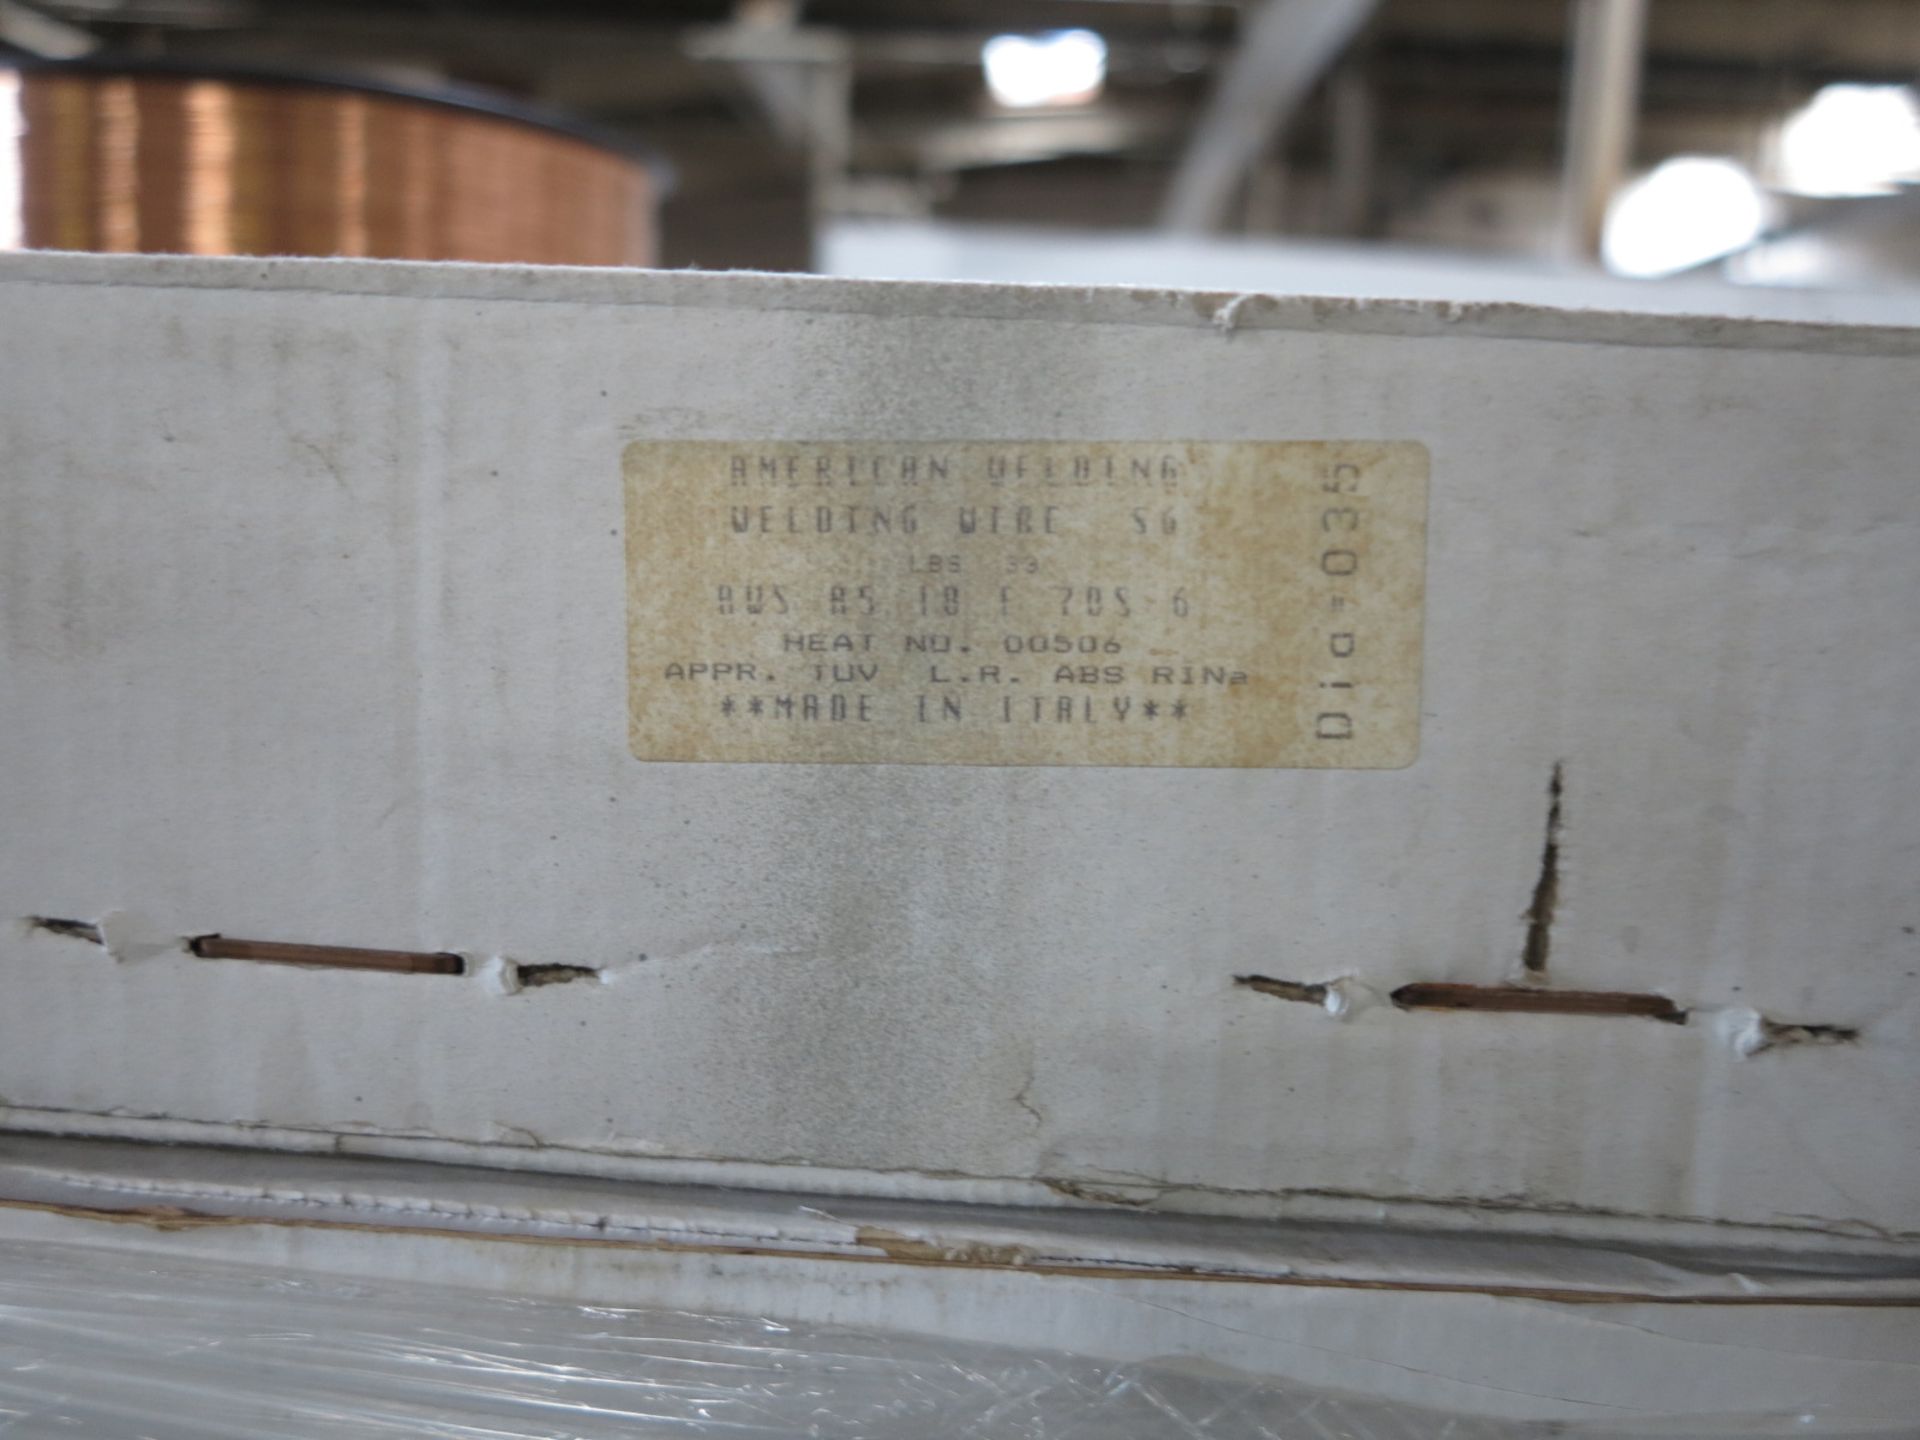 LOT - PALLET OF AMERICAN WELDING WIRE, S6, DIA. .035", 81 BOXES - Bild 2 aus 2